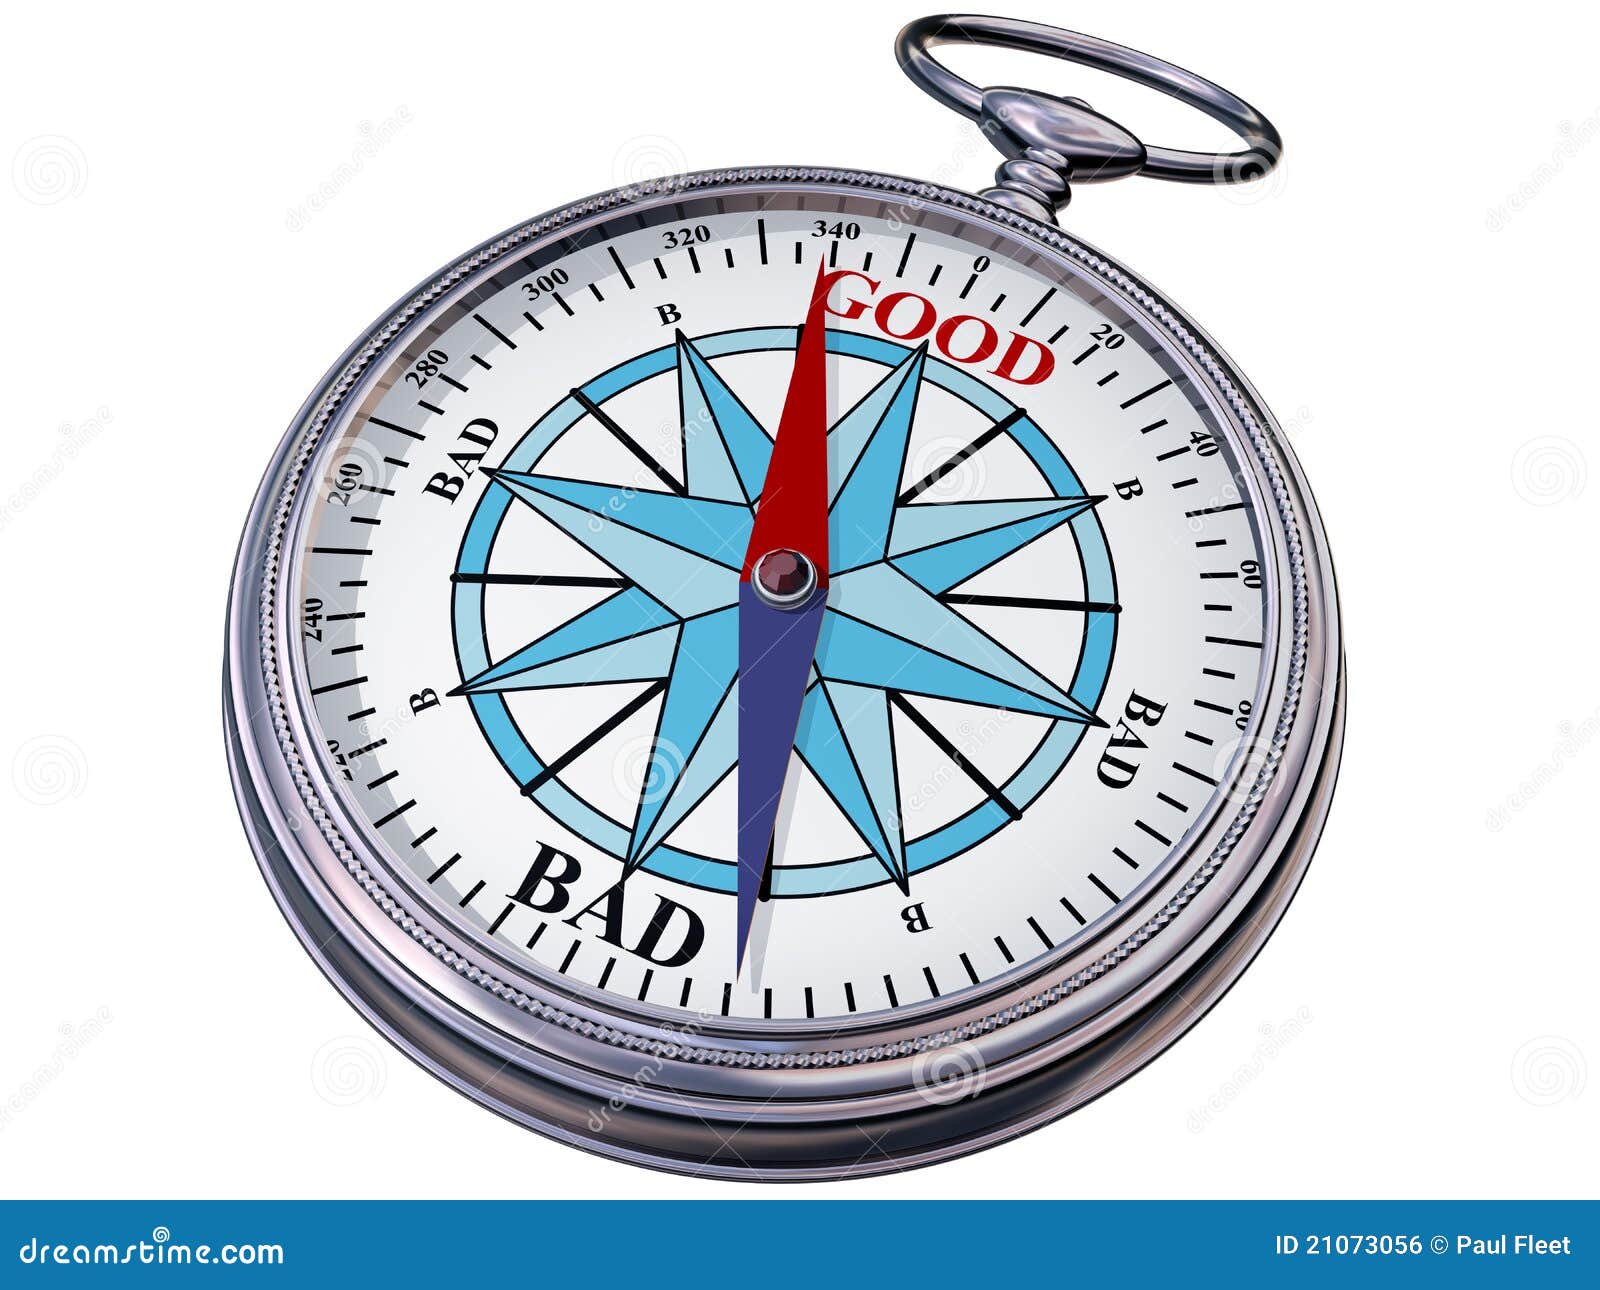 moral-compass-21073056.jpg